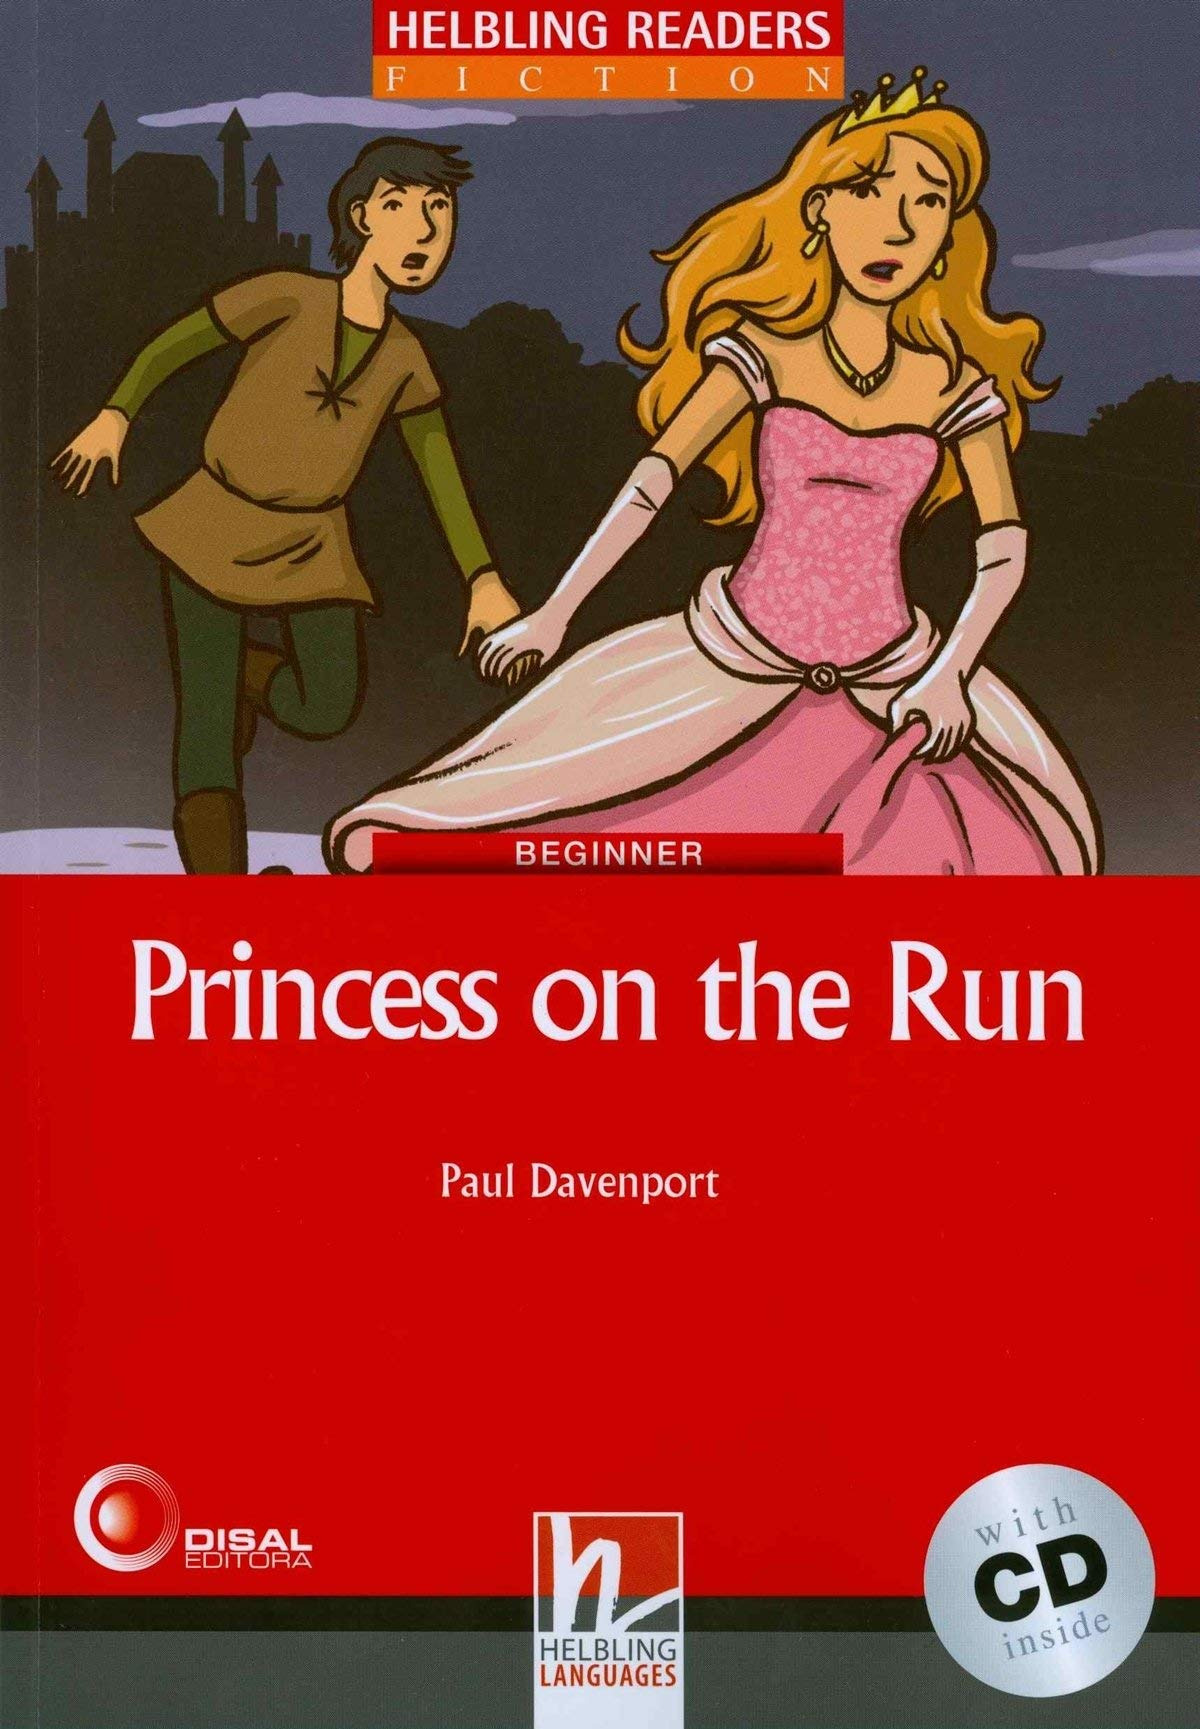 Princess on the run